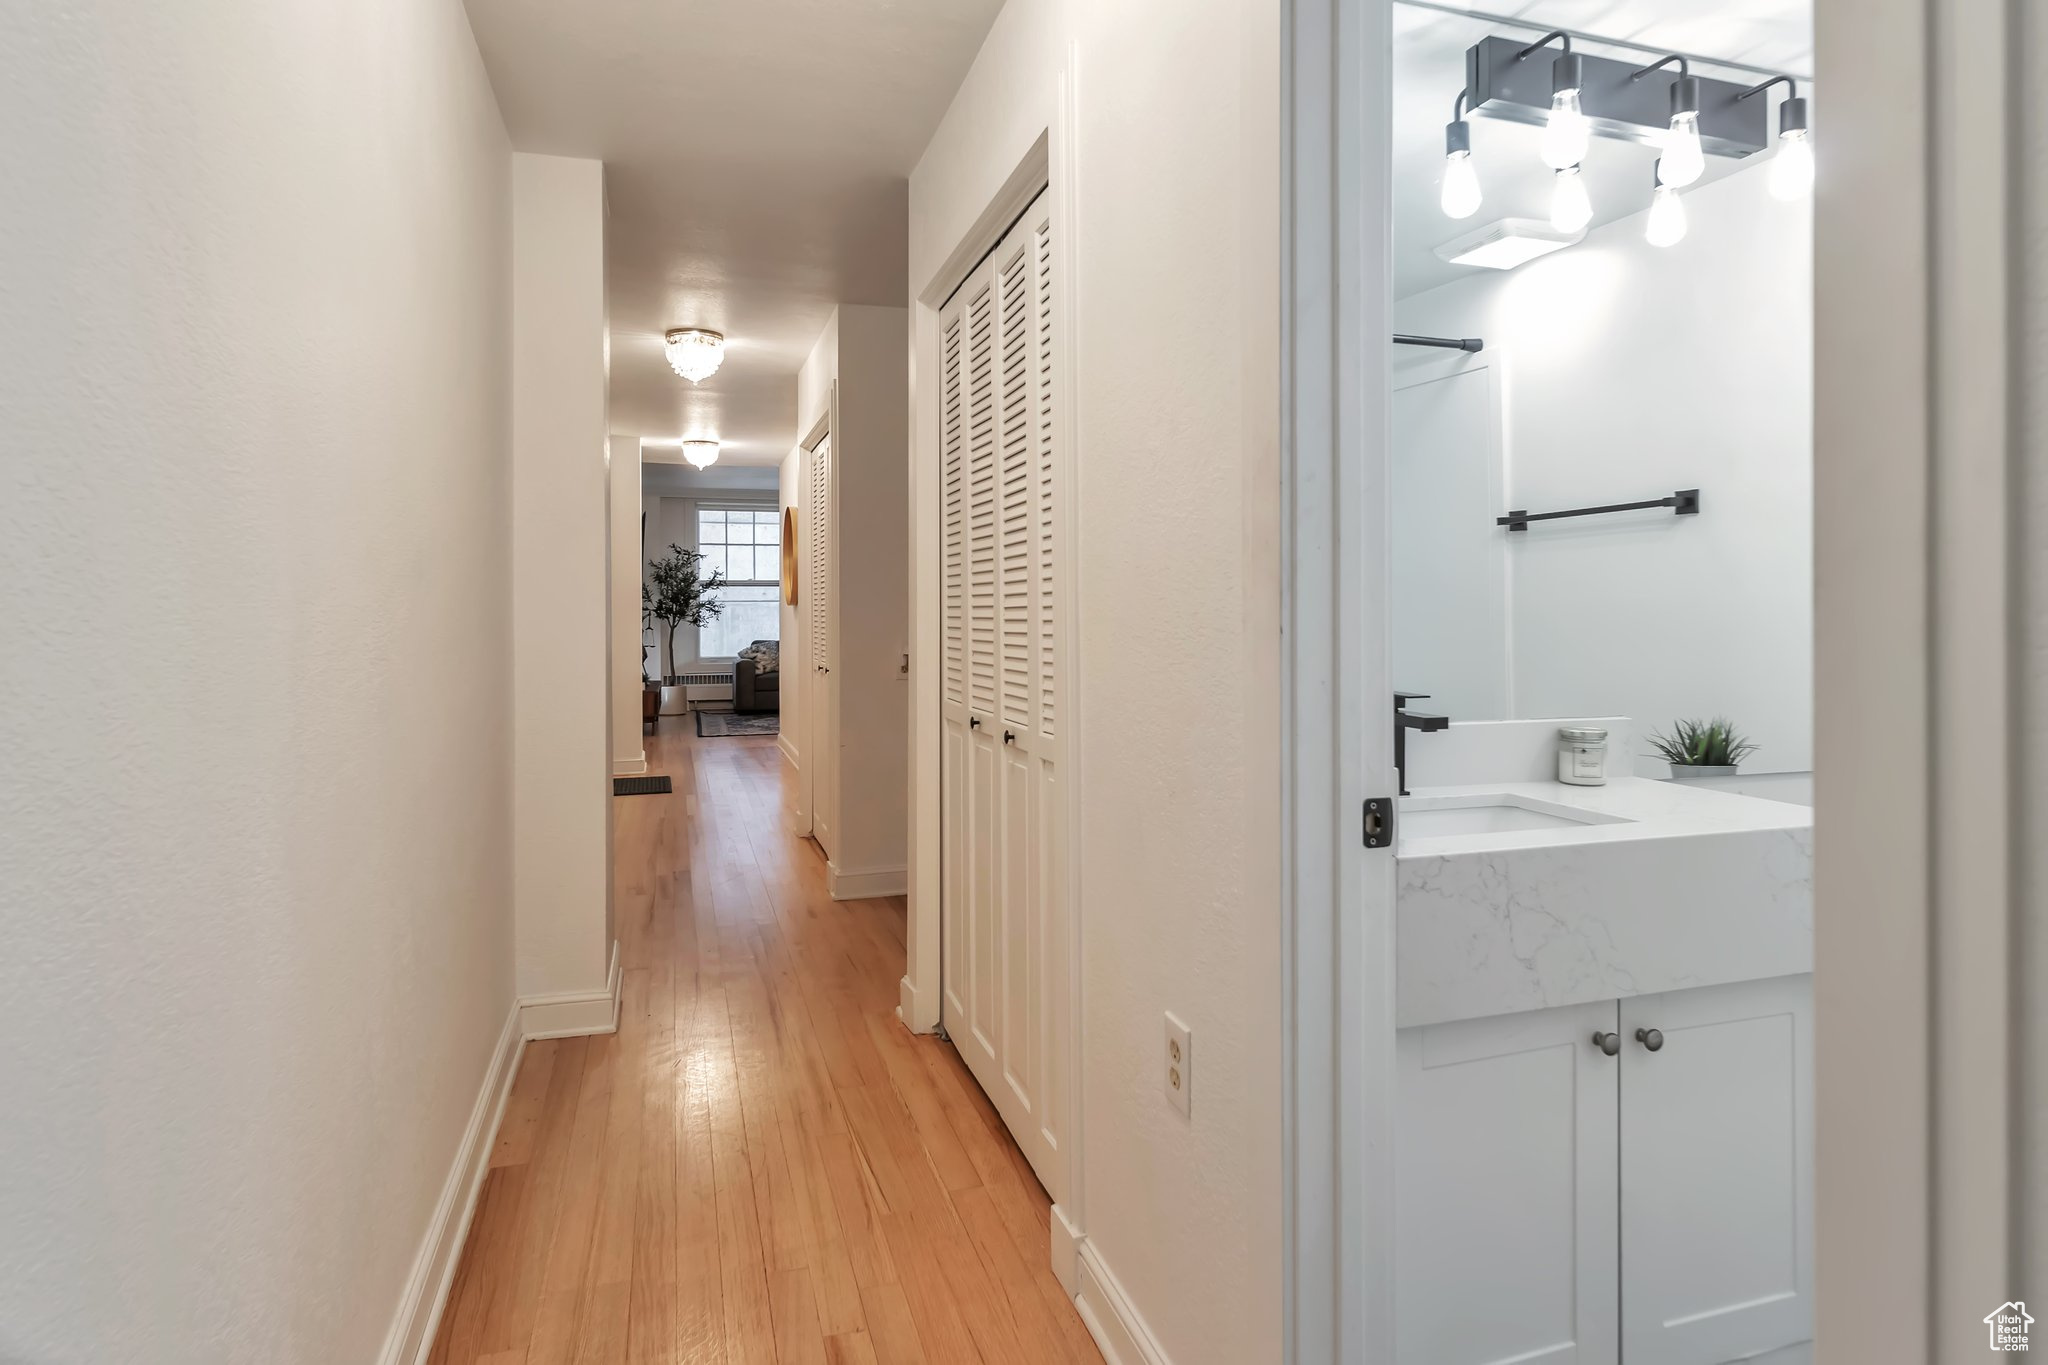 Hallway with sink and light hardwood / wood-style floors